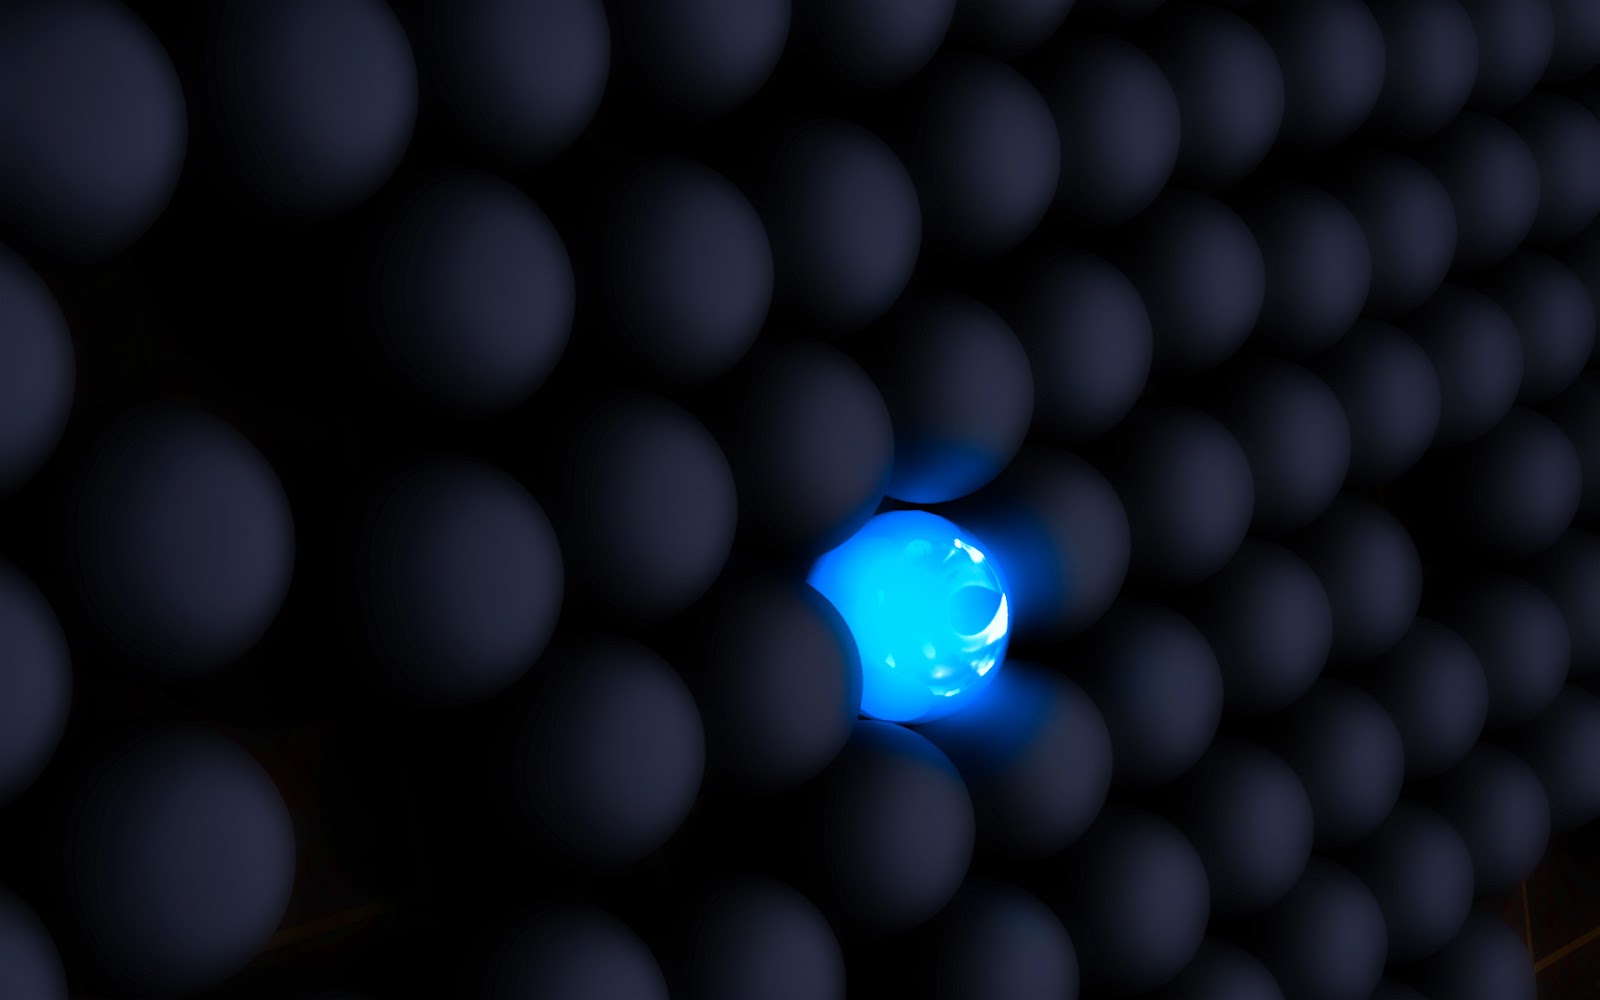 https://blogger.googleusercontent.com/img/b/R29vZ2xl/AVvXsEhPDojWwIyloAqWifGG3p0rWsQBM-CtdwdYDUSvvnCnnnRmFARDDVv4cUEe2U6UfH3EtGYOJzDJ6sM3OtEtZLIkygbNvcCtitTwXkSDKrfIKiDj1XcSOv9ZmcBHRQm8NCtp4zCCKewLPUI/s1600/3d+blue+ball+vs+black+balls+hd+wallpaper.jpg